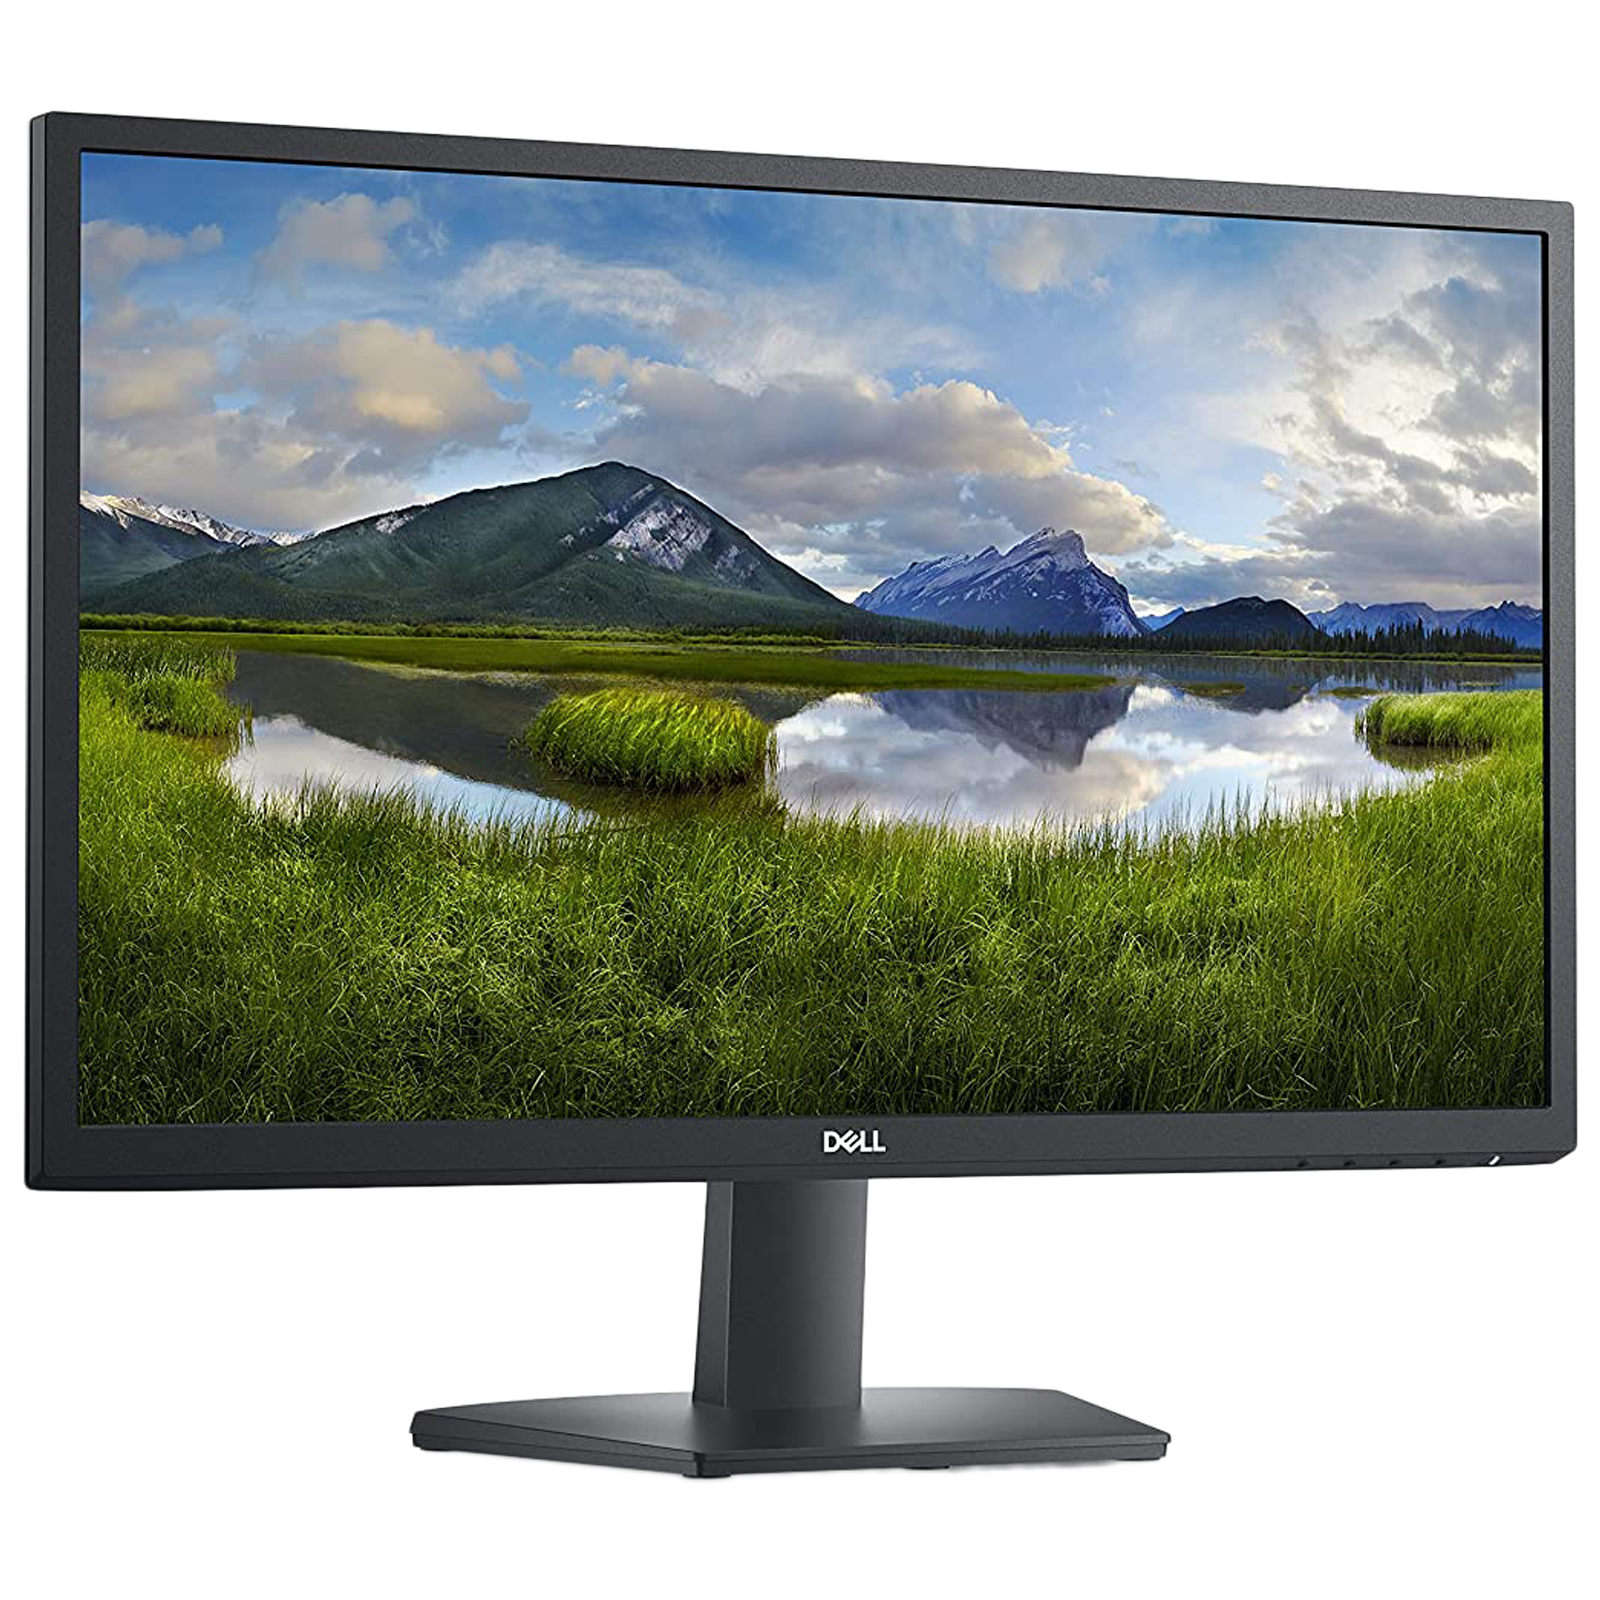 Dell SE2422H 60.96cm (24 Inches) Full HD Flat Panel Monitor (AMD FreeSync Technology, VGA + HDMI, 75 Hz, 210-AZGV, Black)_2